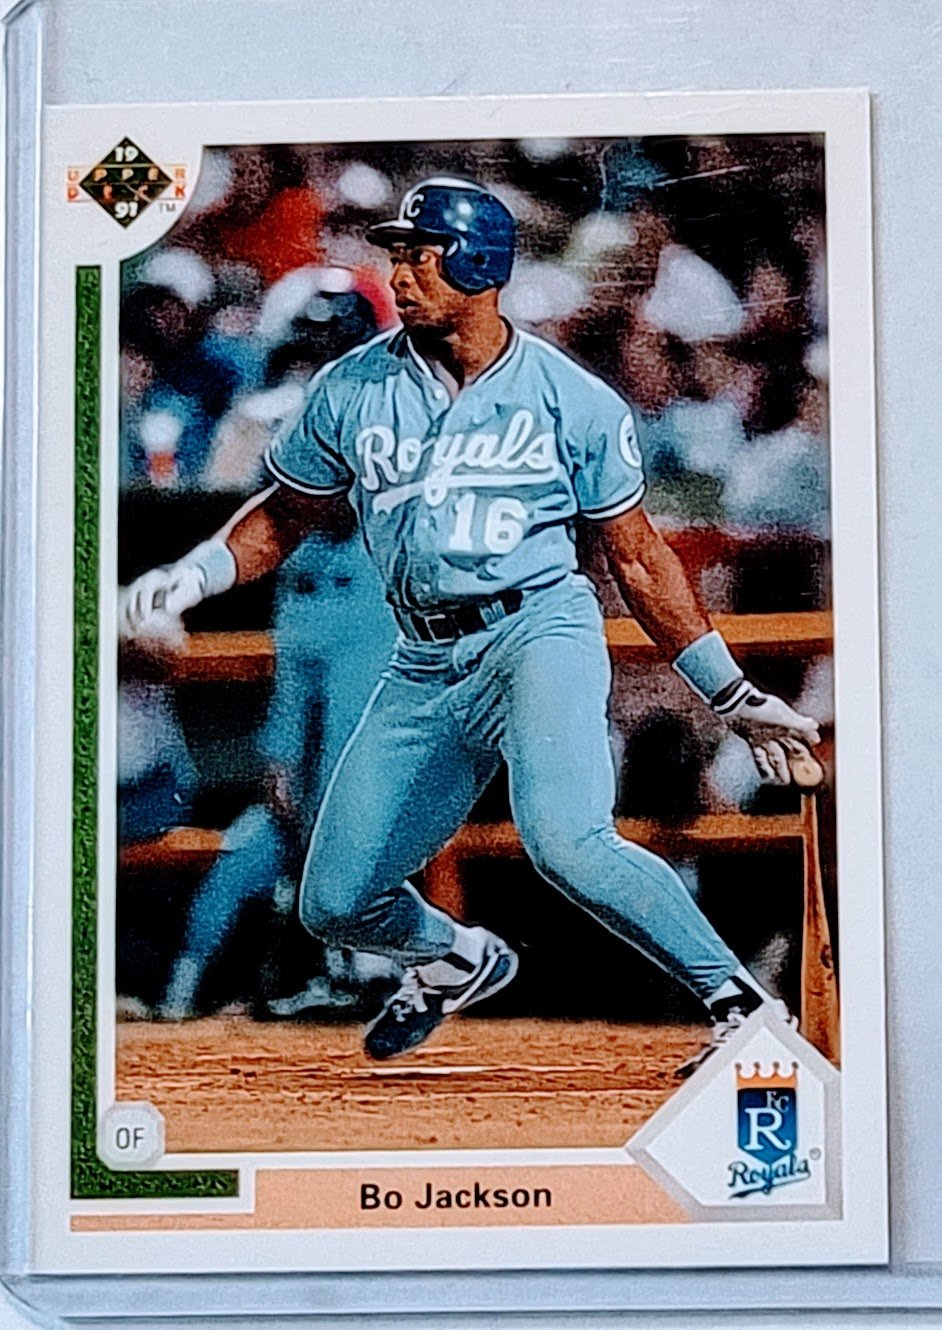 1991 Upper Deck Bo Jackson Baseball Trading Card TPTV simple Xclusive Collectibles   